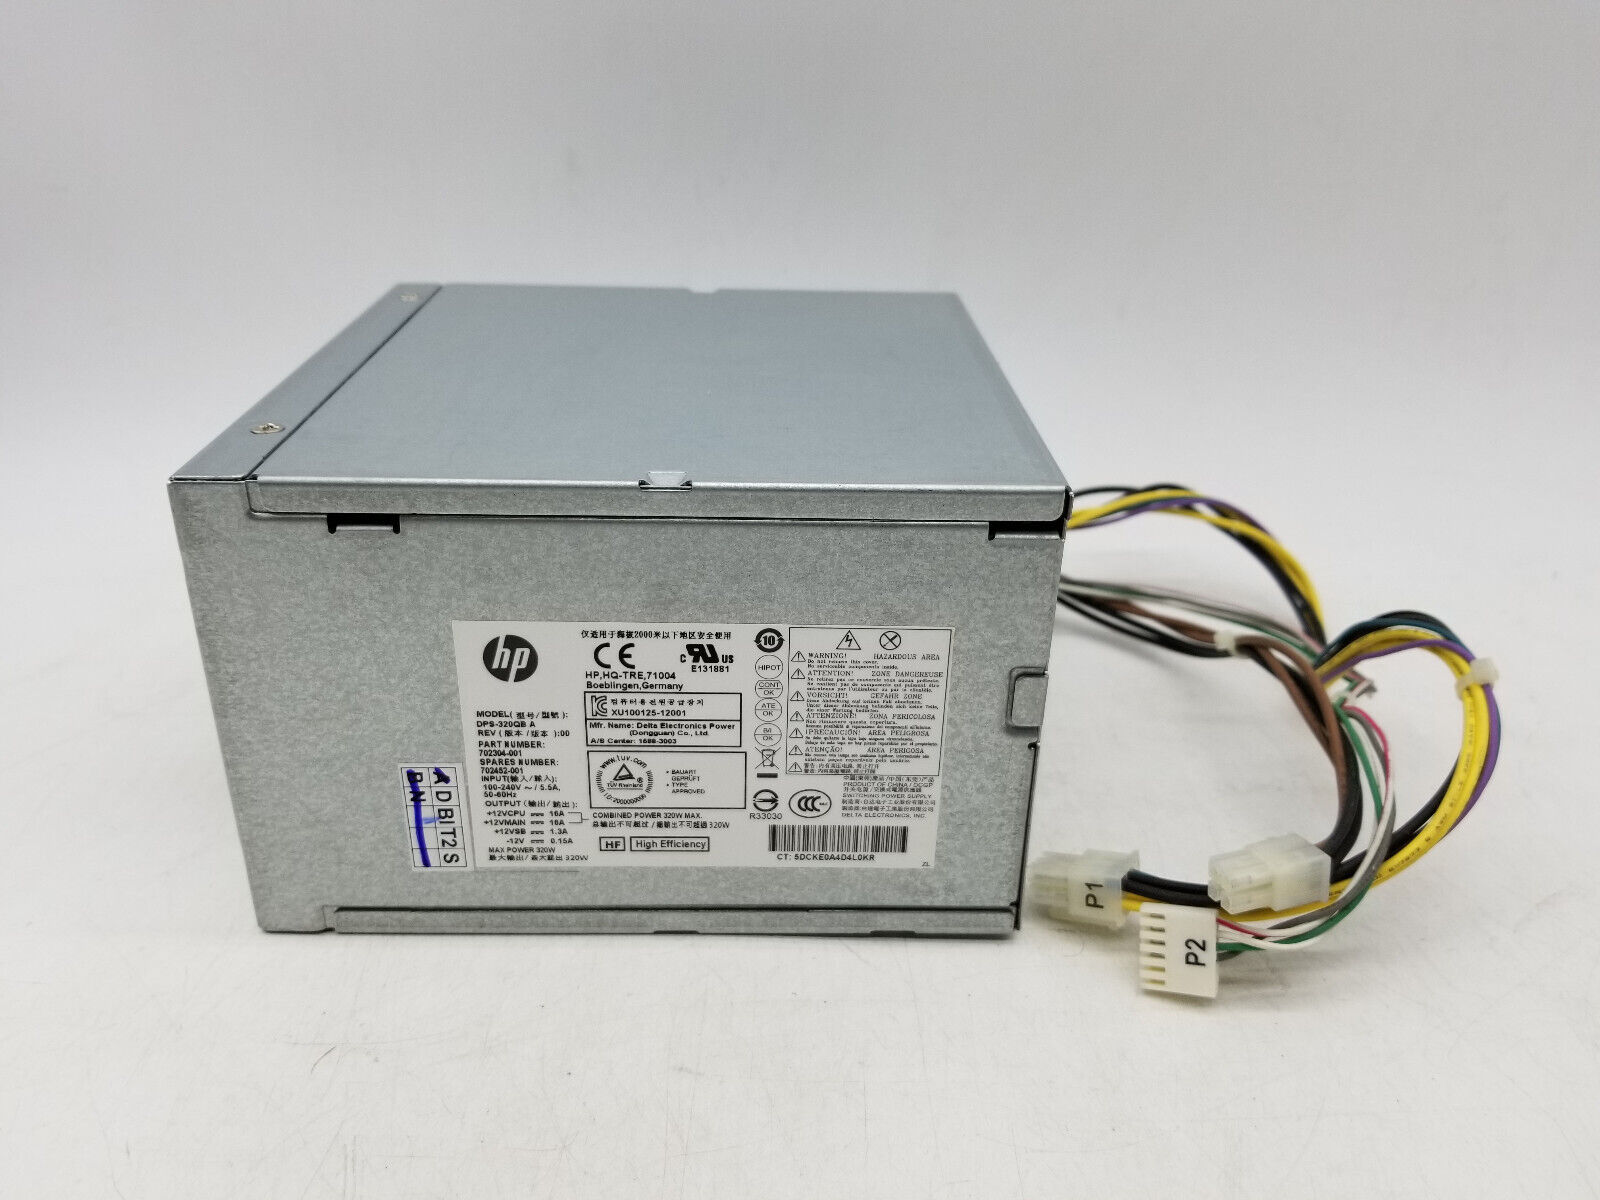 HP DPS-320QB A Power Supply 320W 702304-001